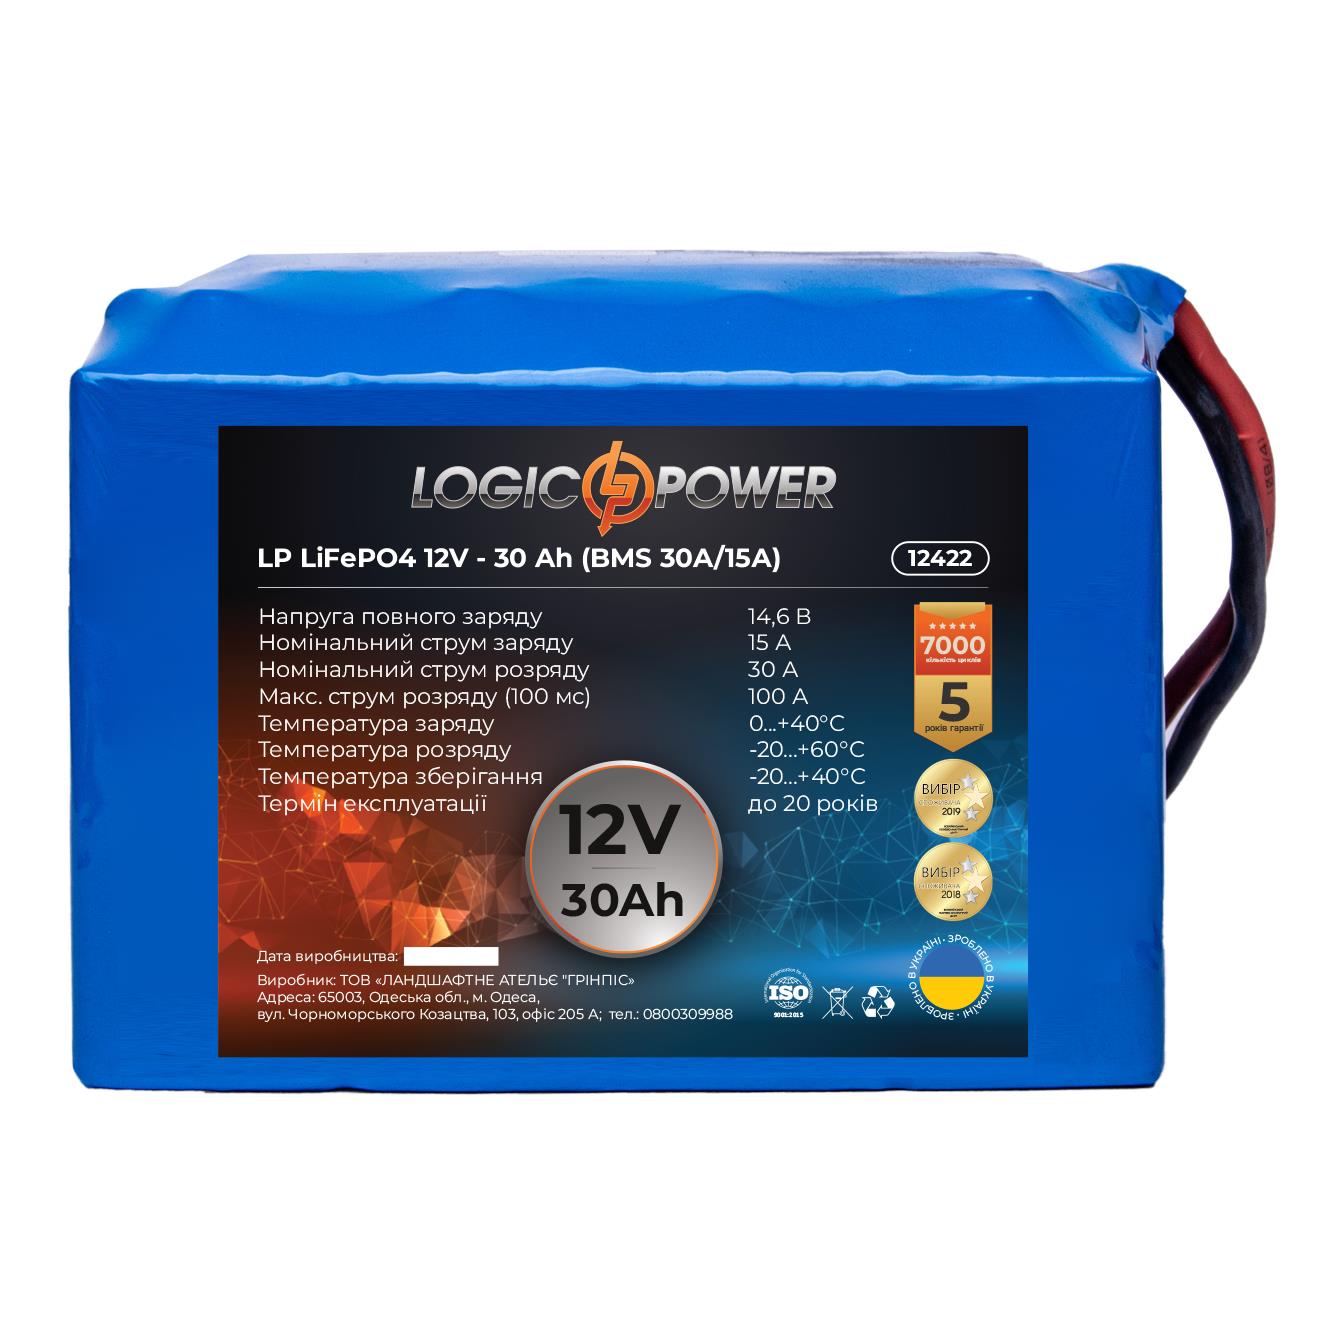 LogicPower LP LiFePO4 12V - 30 Ah (BMS 30A/15А) (12422)